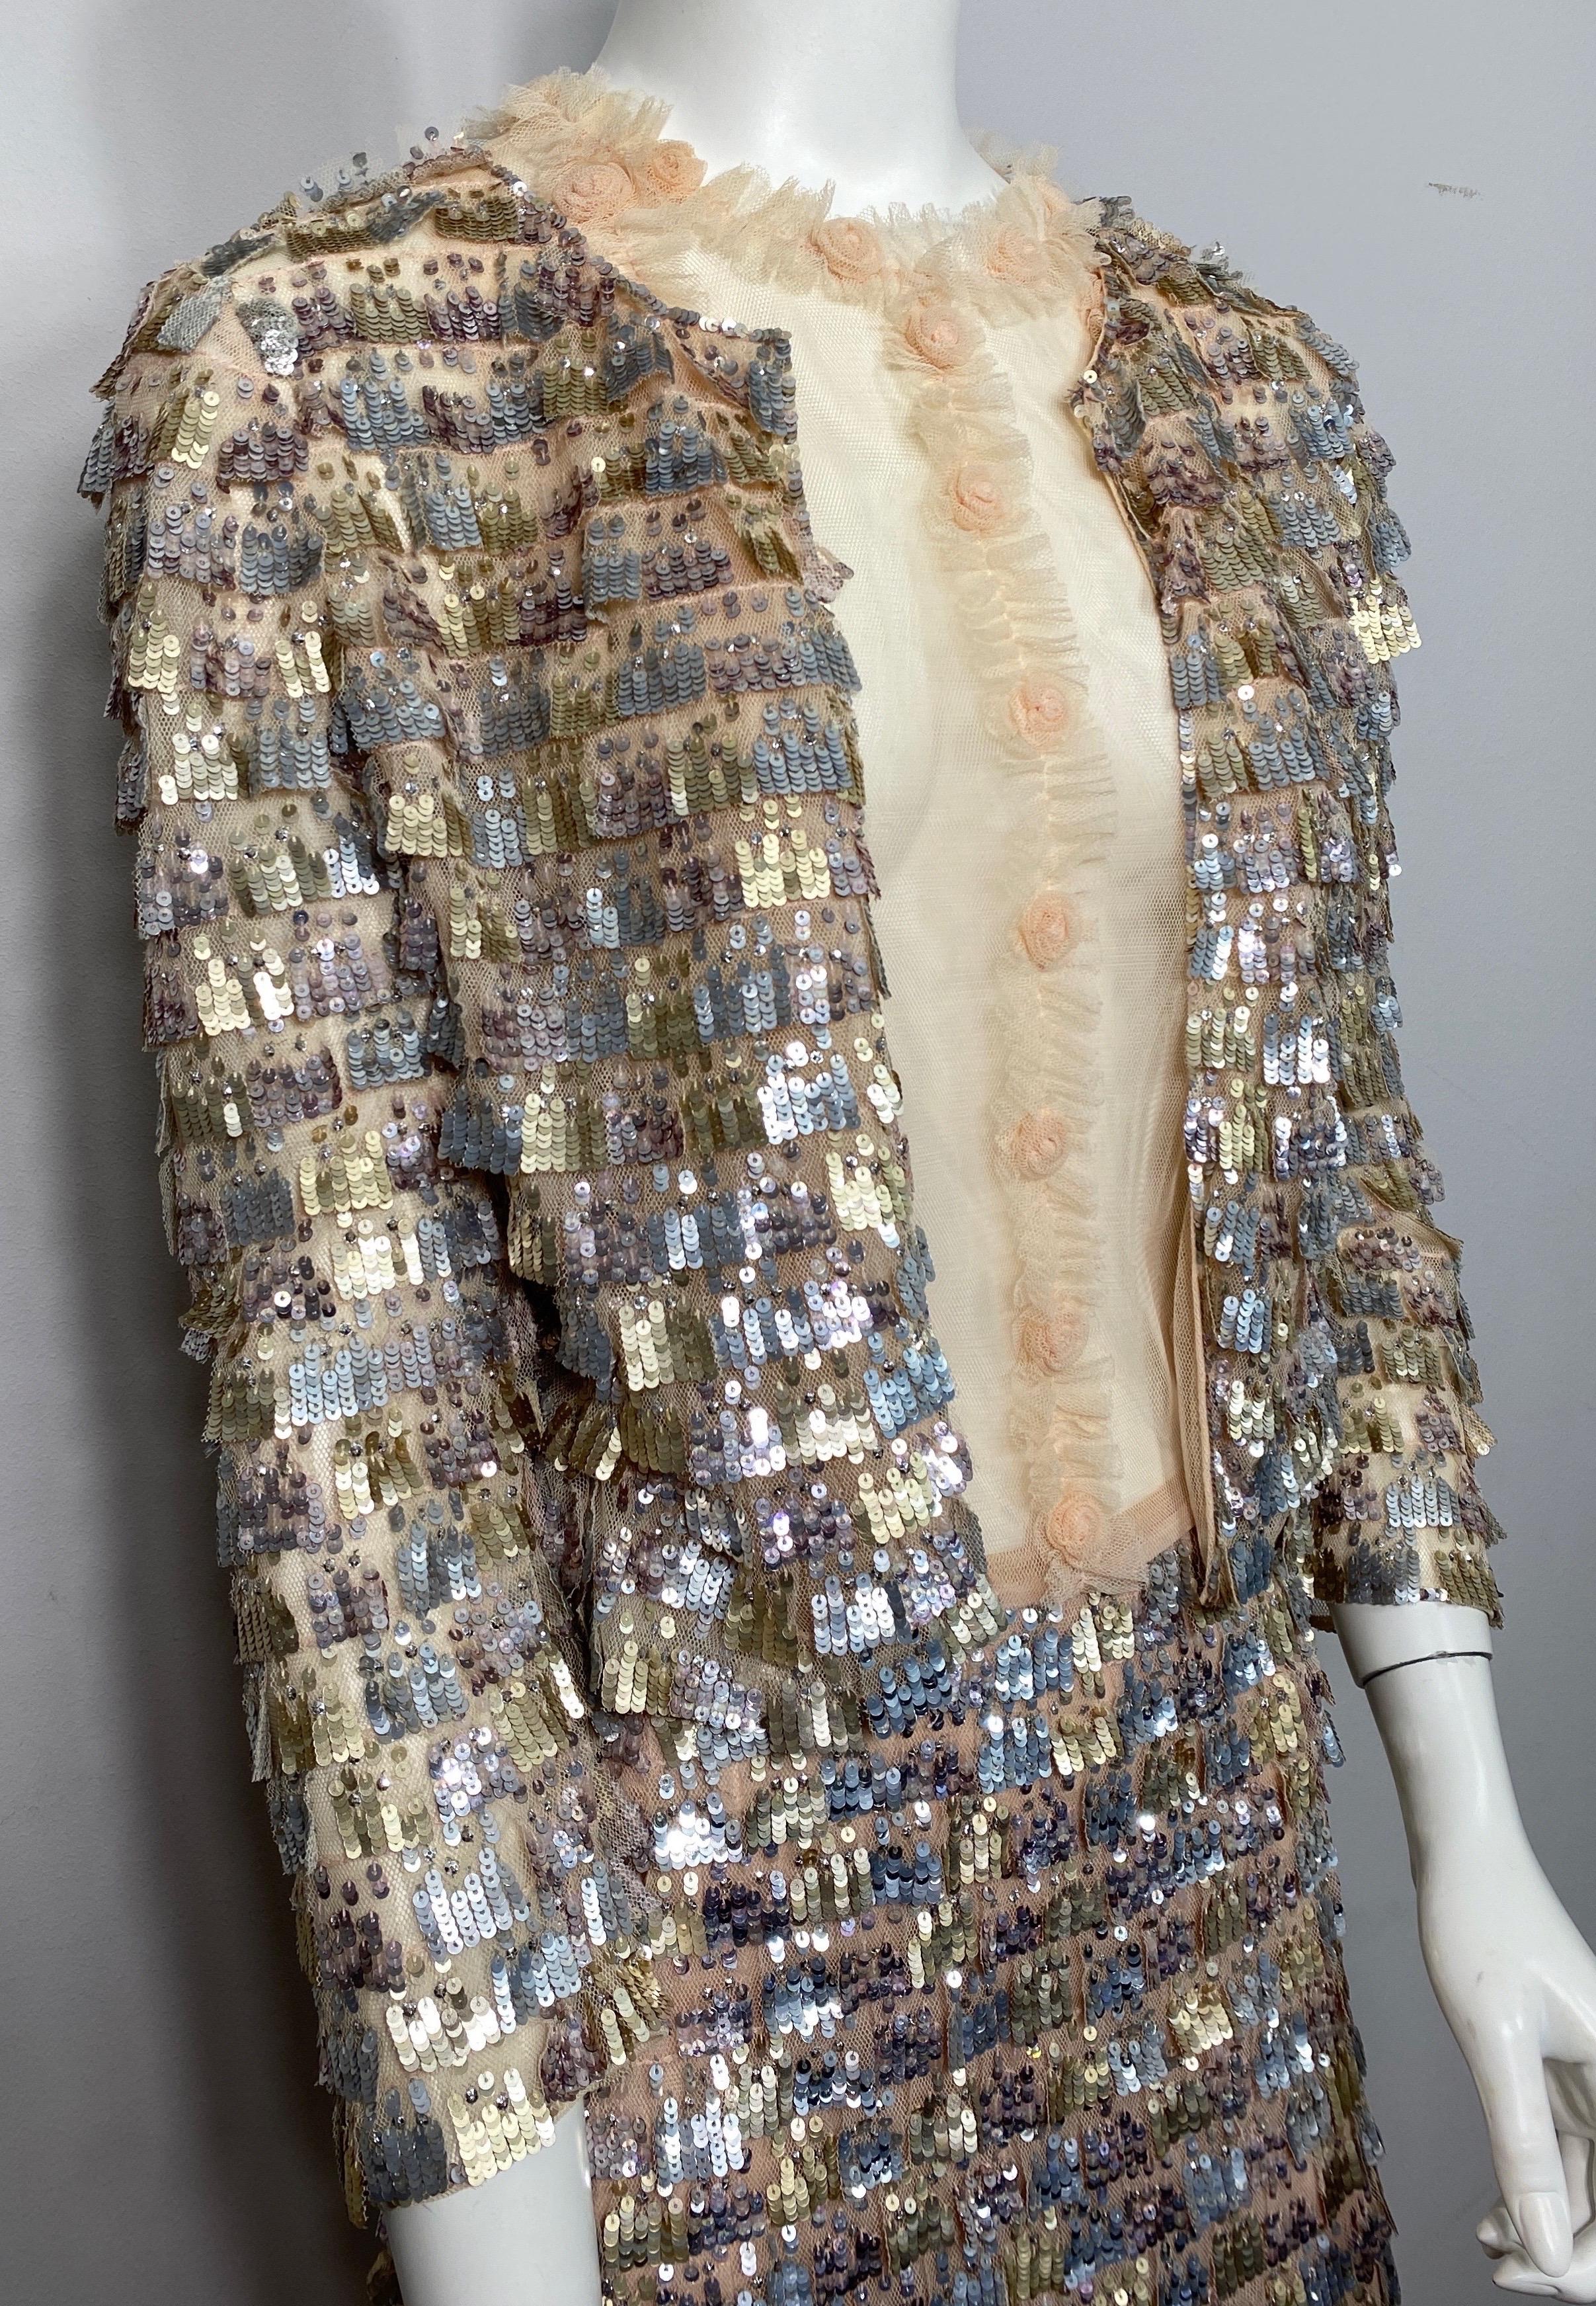 Oscar de la Renta Early 2000’s Nude and Metallic Gown with Jacket-Size 4 3